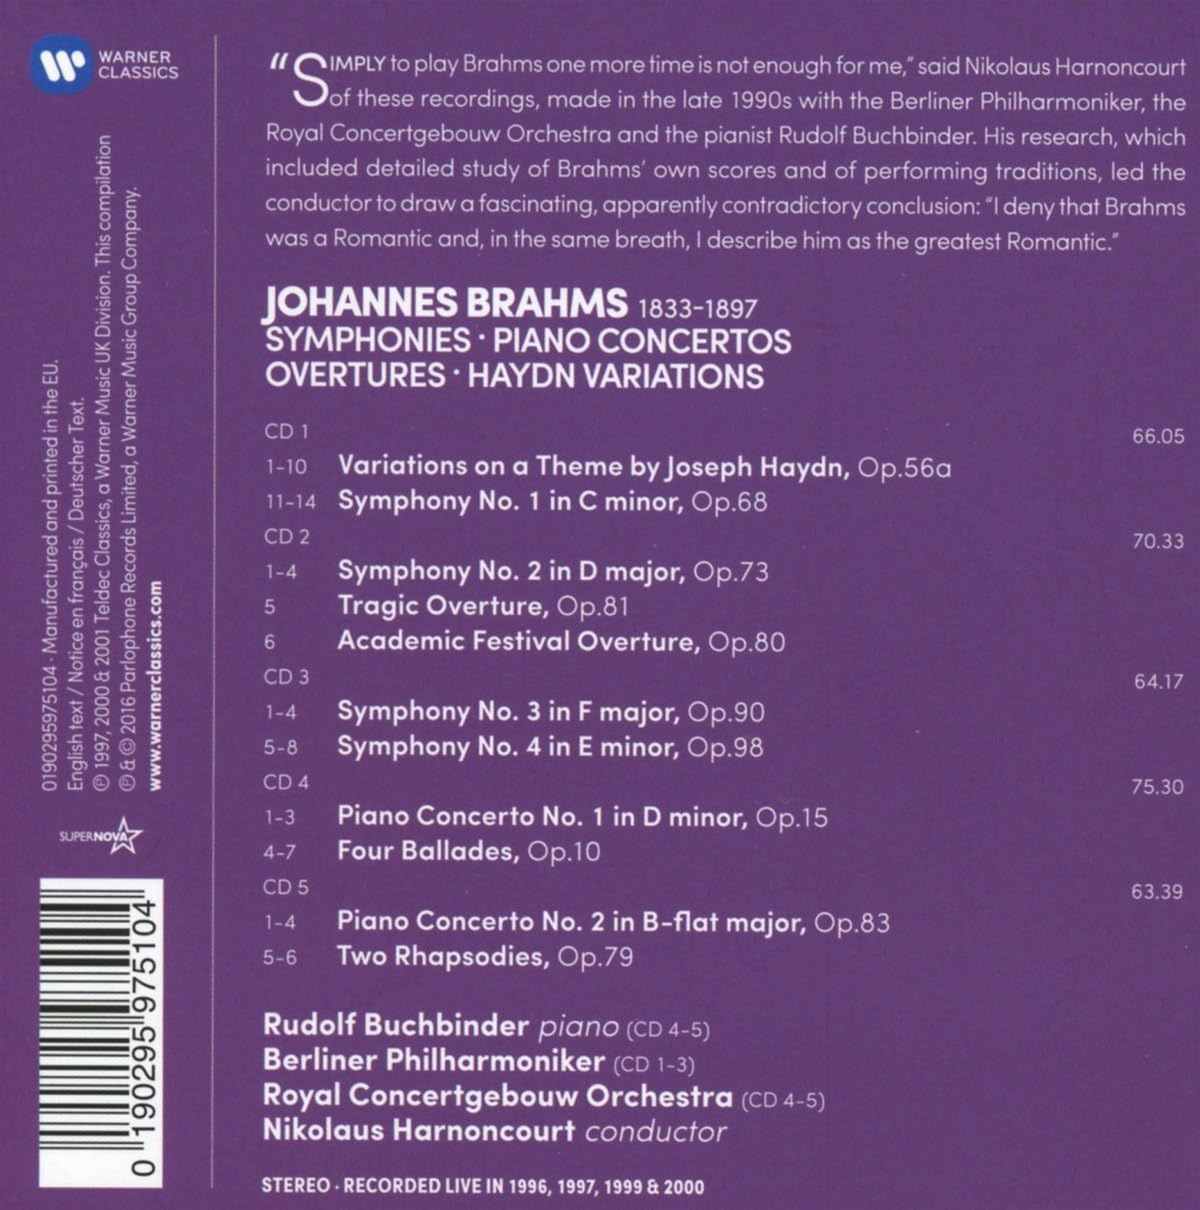 Brahms: Symphonies, Overtures; Haydn Variations & Piano Concertos (5CDs Box Set) | Nikolaus Harnoncourt, Rudolf Buchbinder